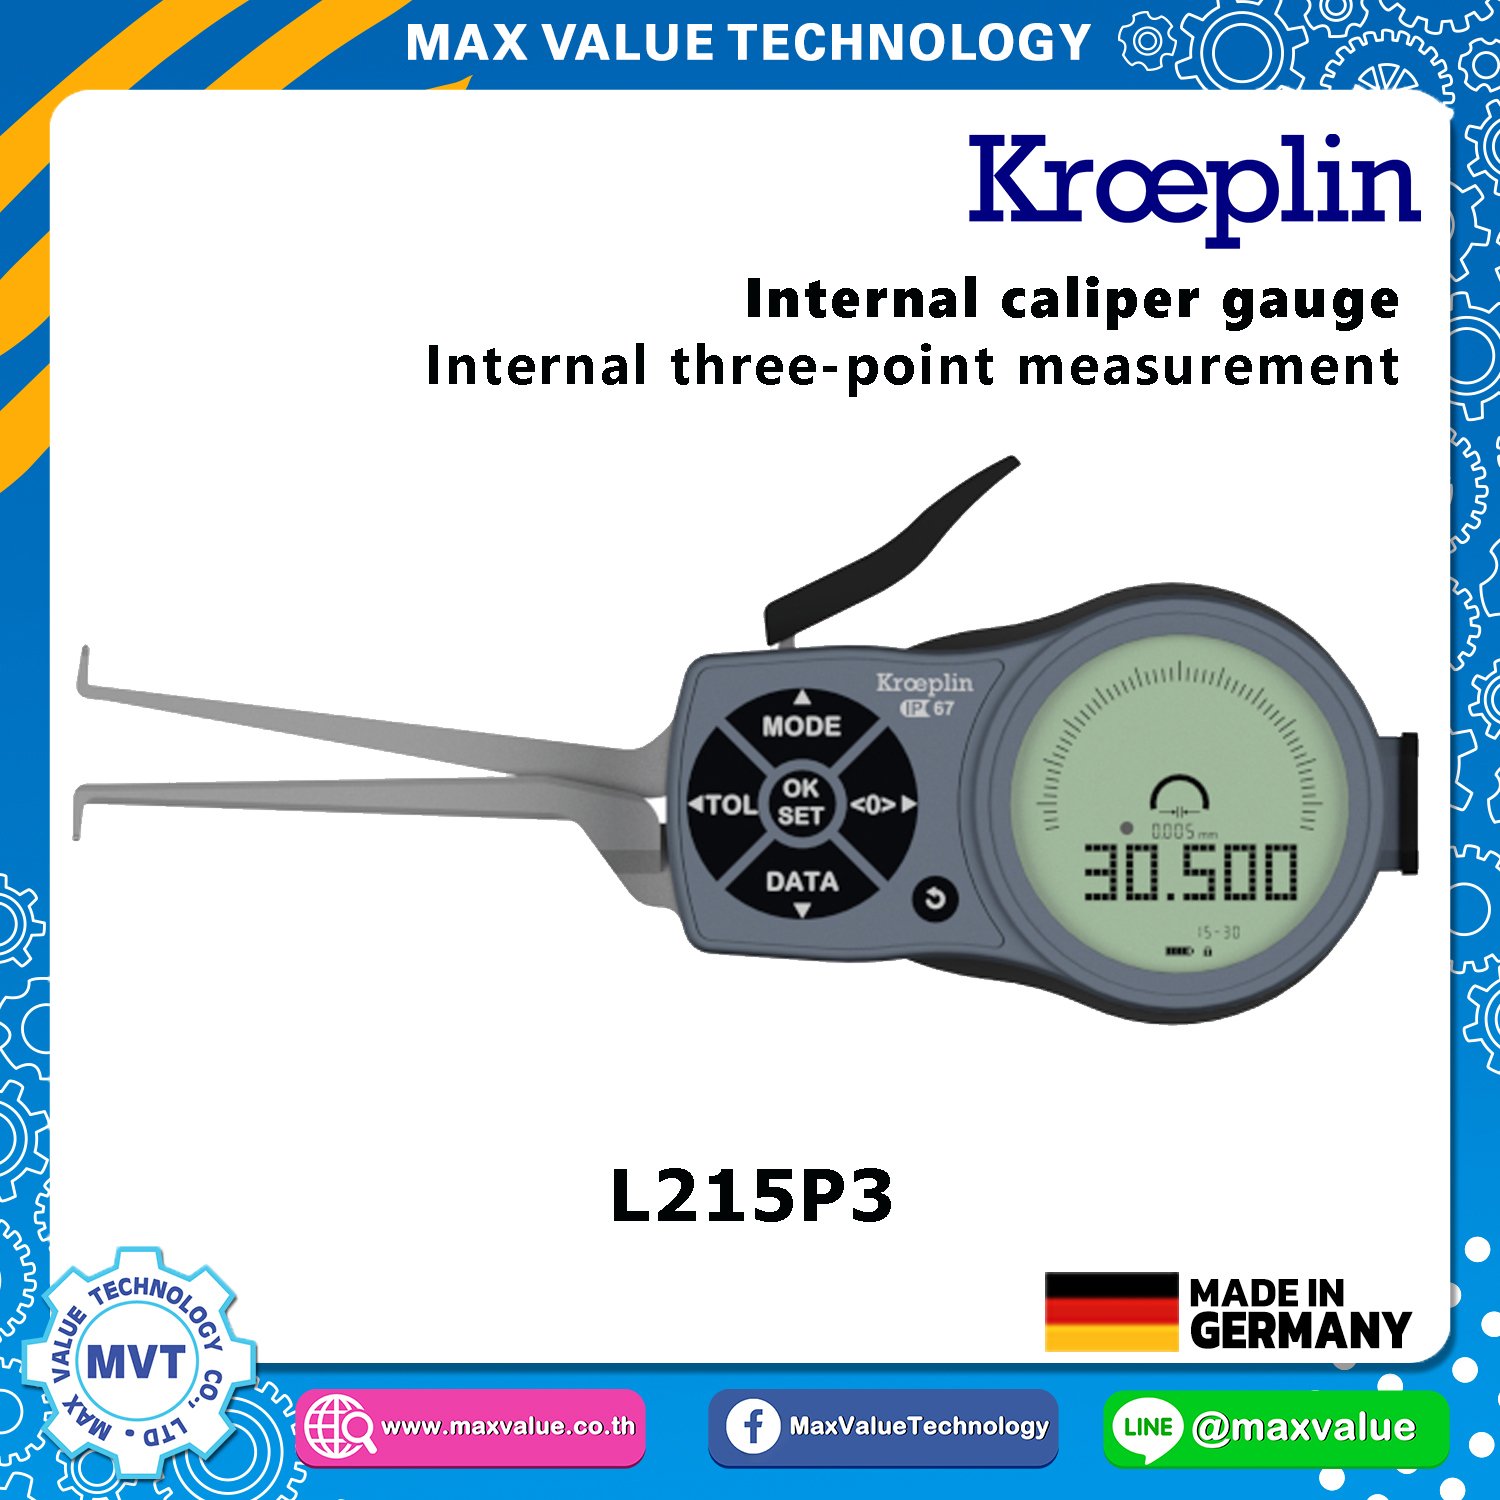 L215P3 - Internal Caliper Gauge (Electronic) 15-30 mm